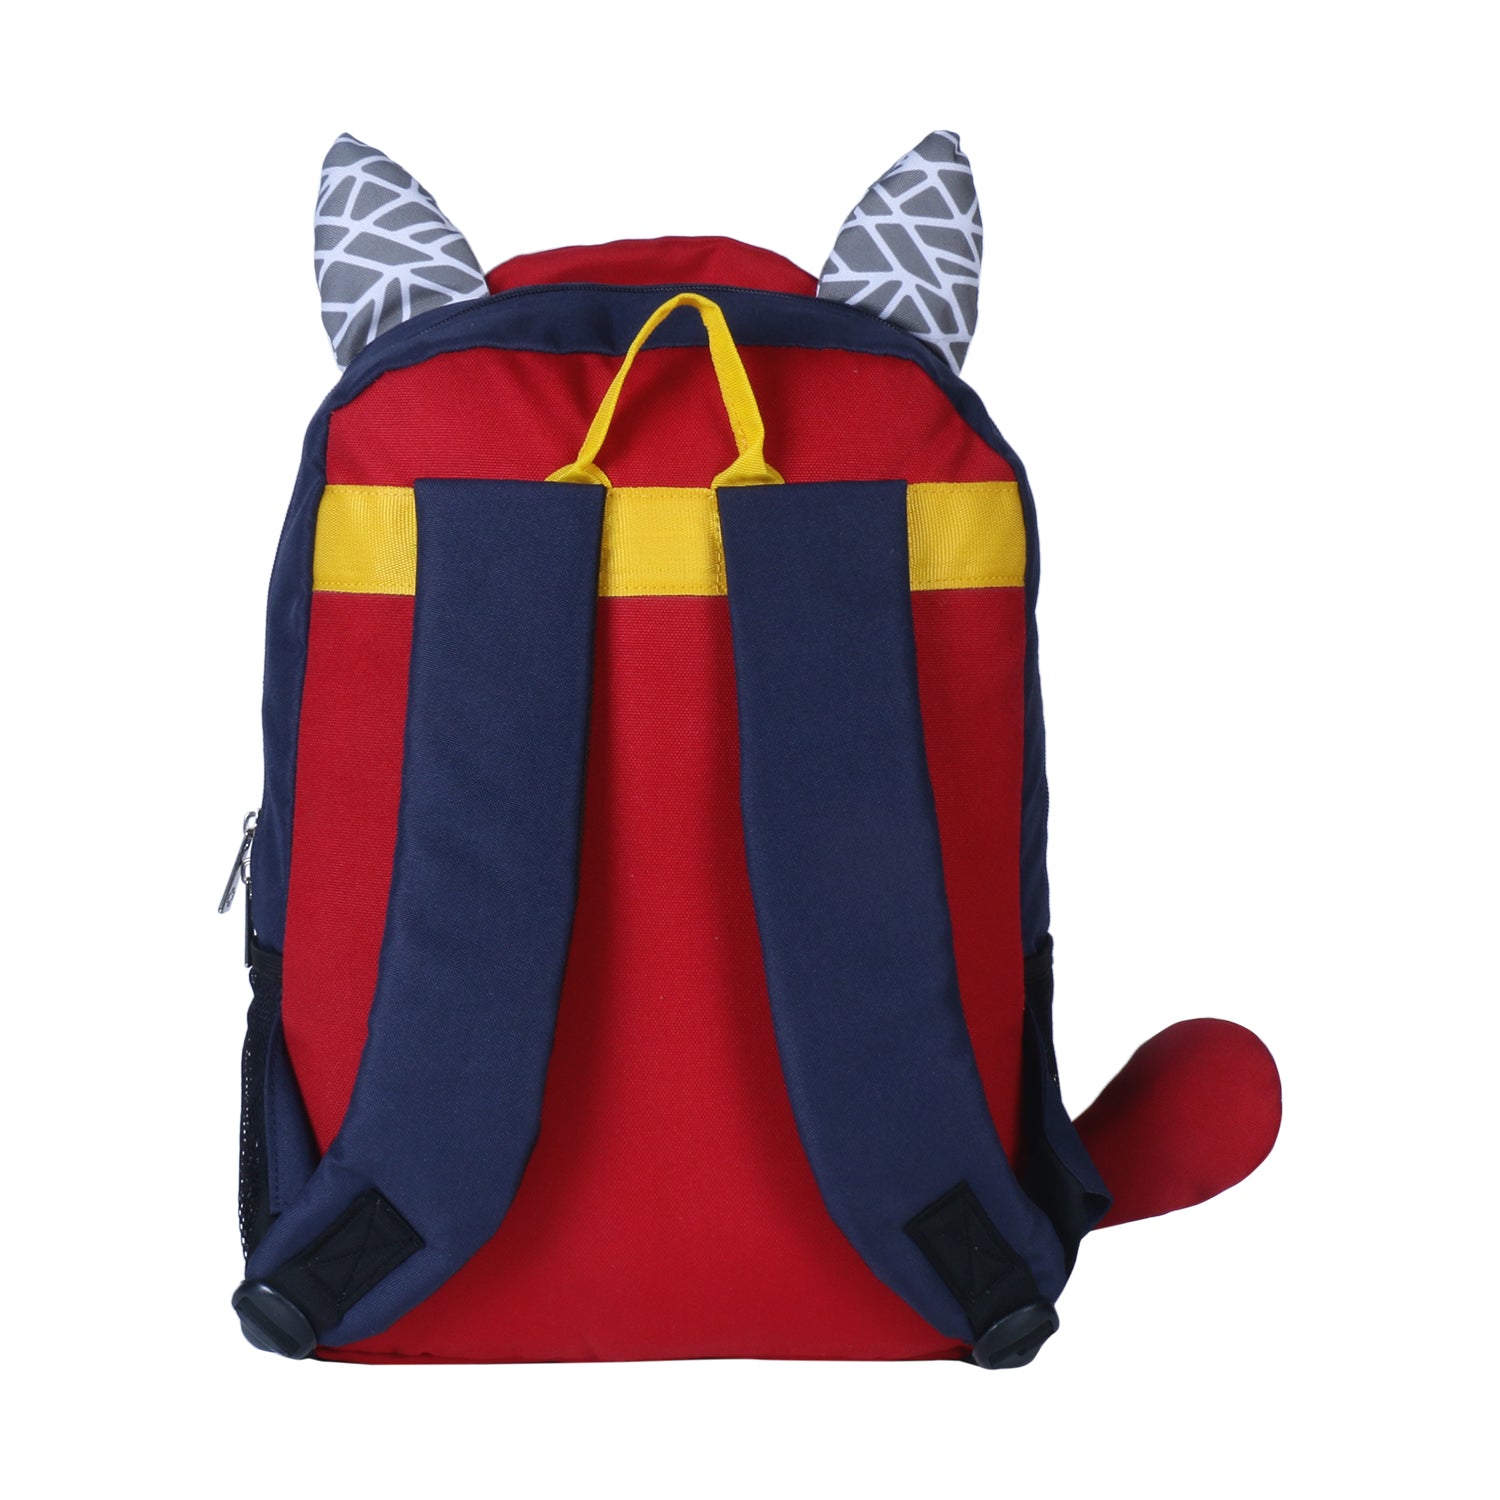 Kids/Toddlers Fun Backpack - Fox